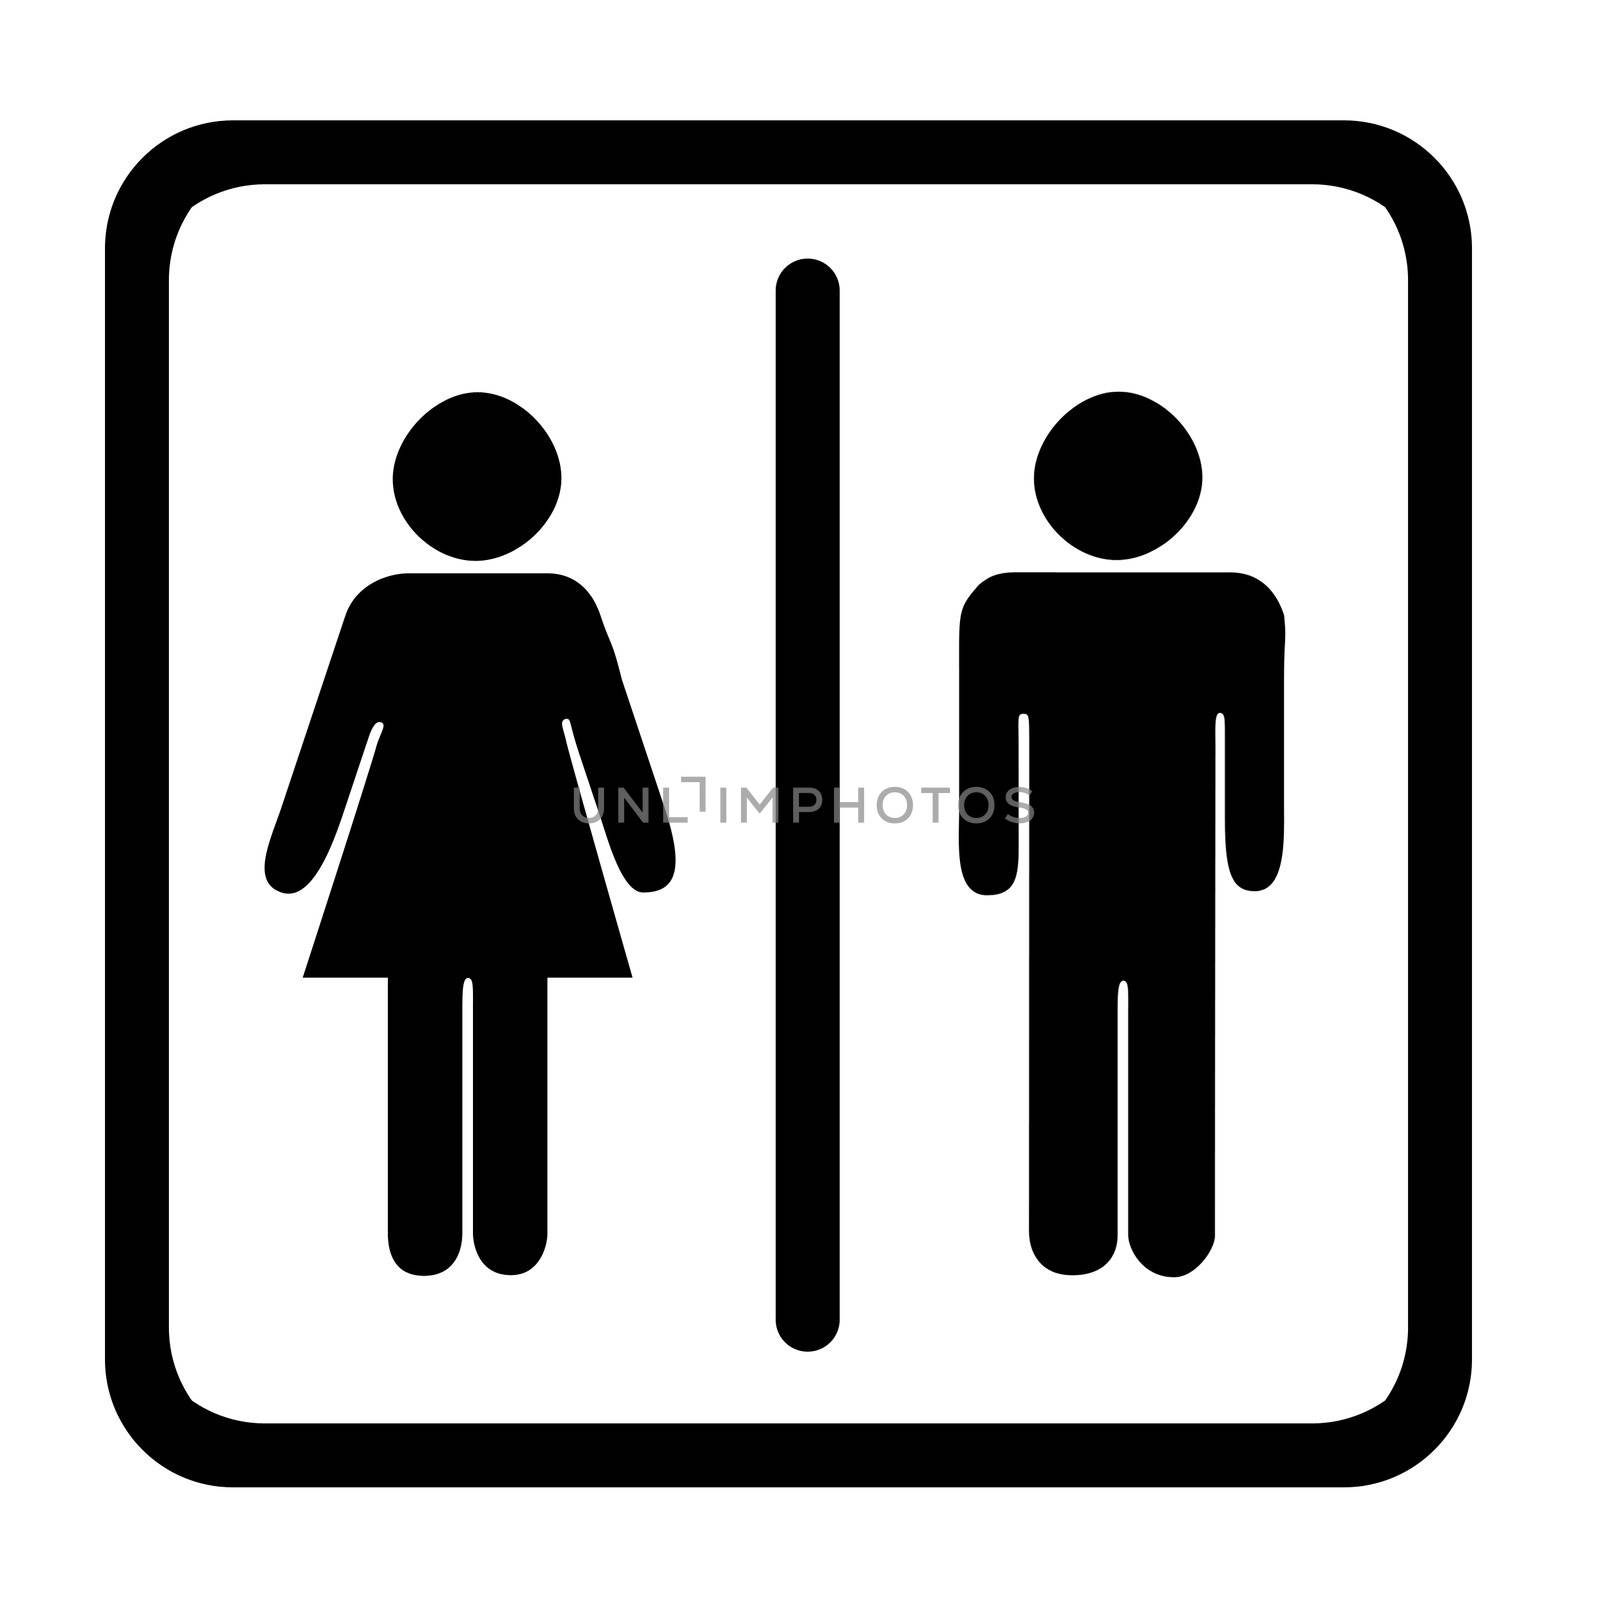 Women's And Men's Toilets Sign, Black On White